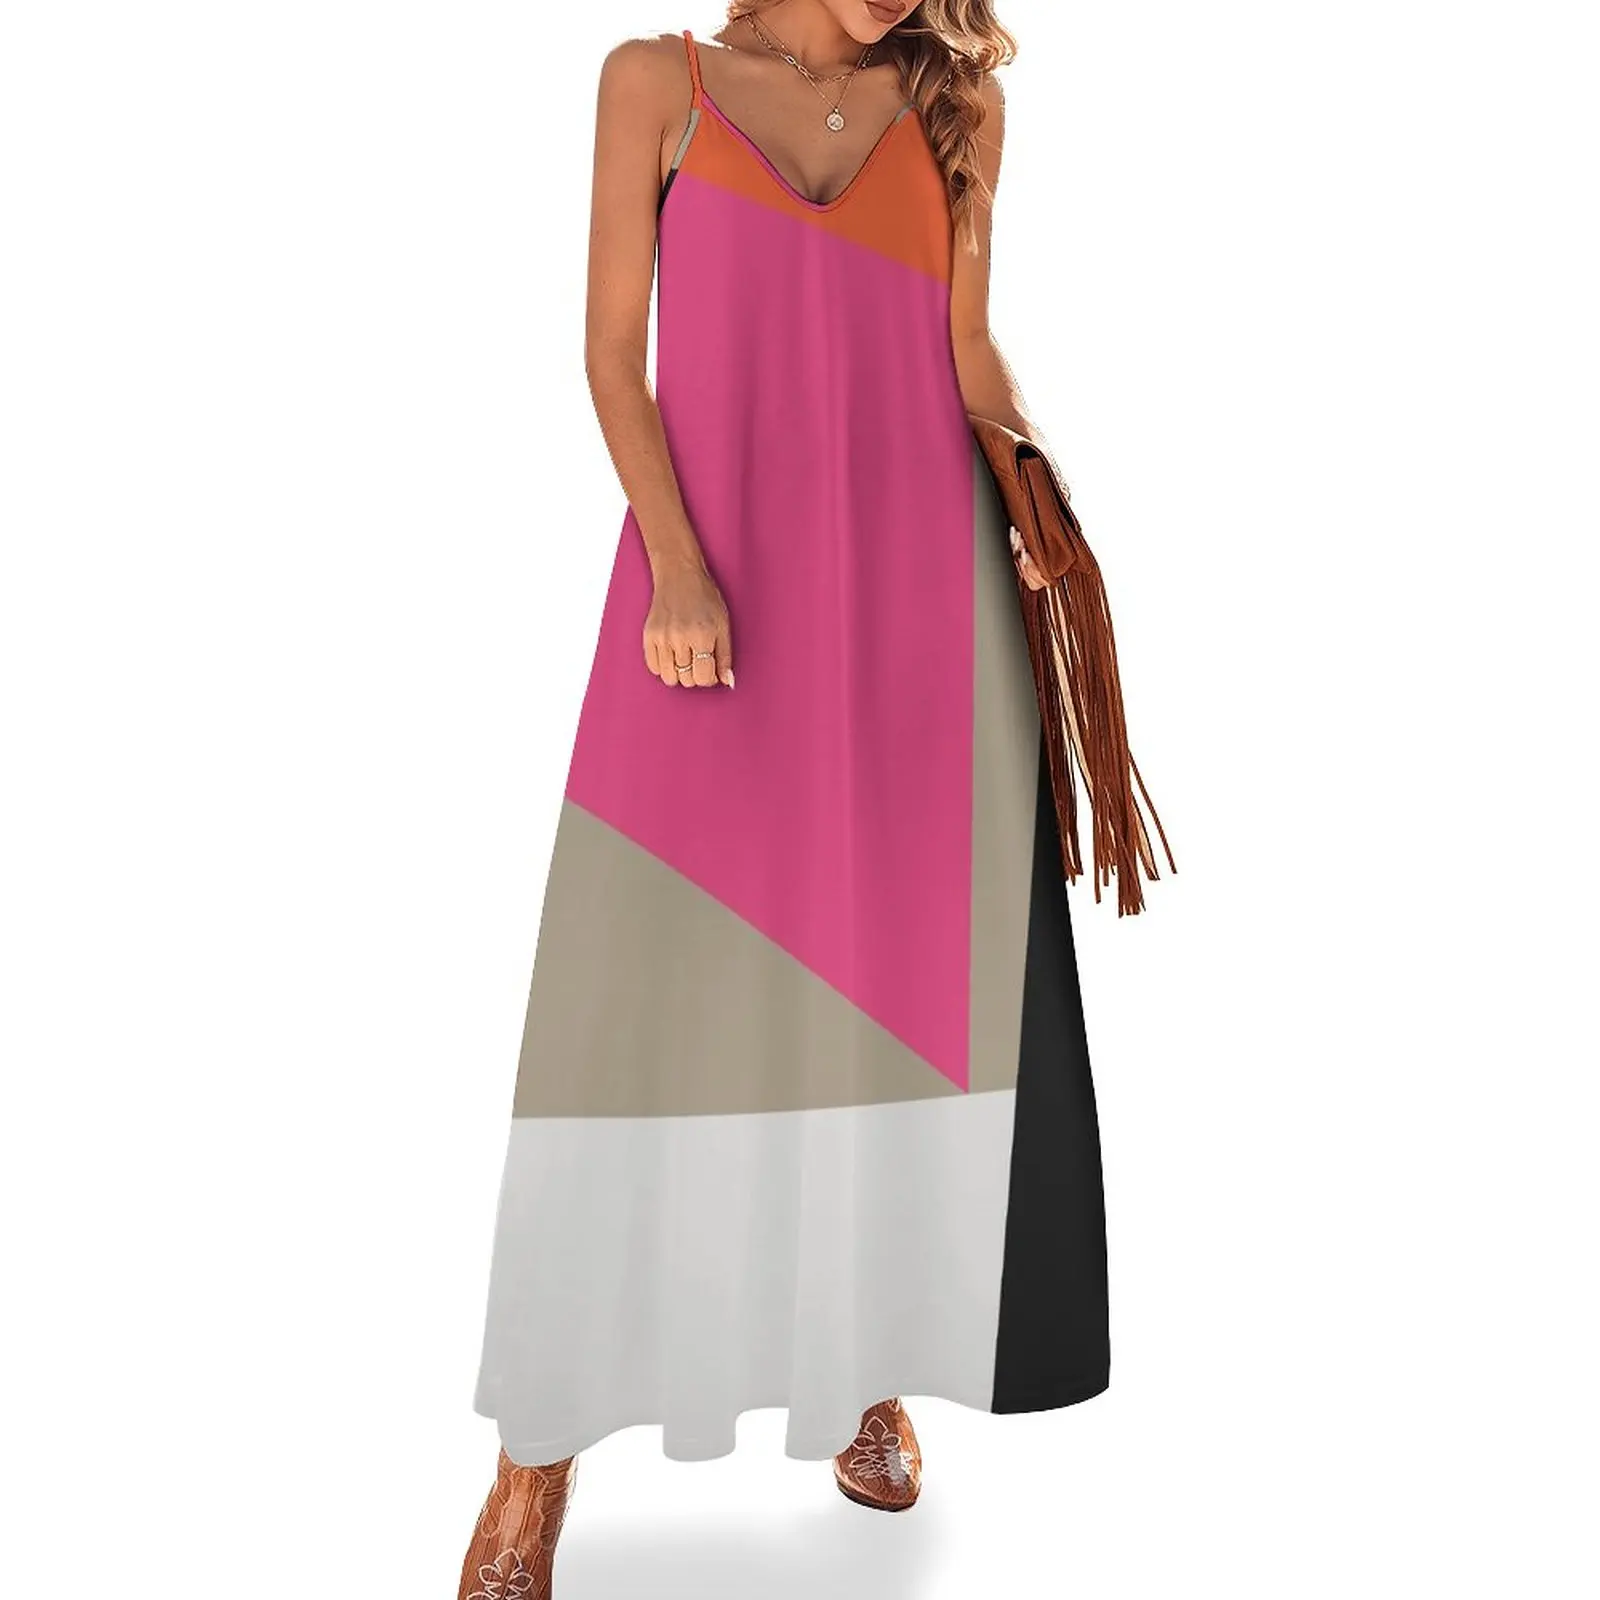 

Mid Century Modern Vintage Inspired Colorfield Geometric Abstract Poster Sleeveless Dress Women's summer long dress